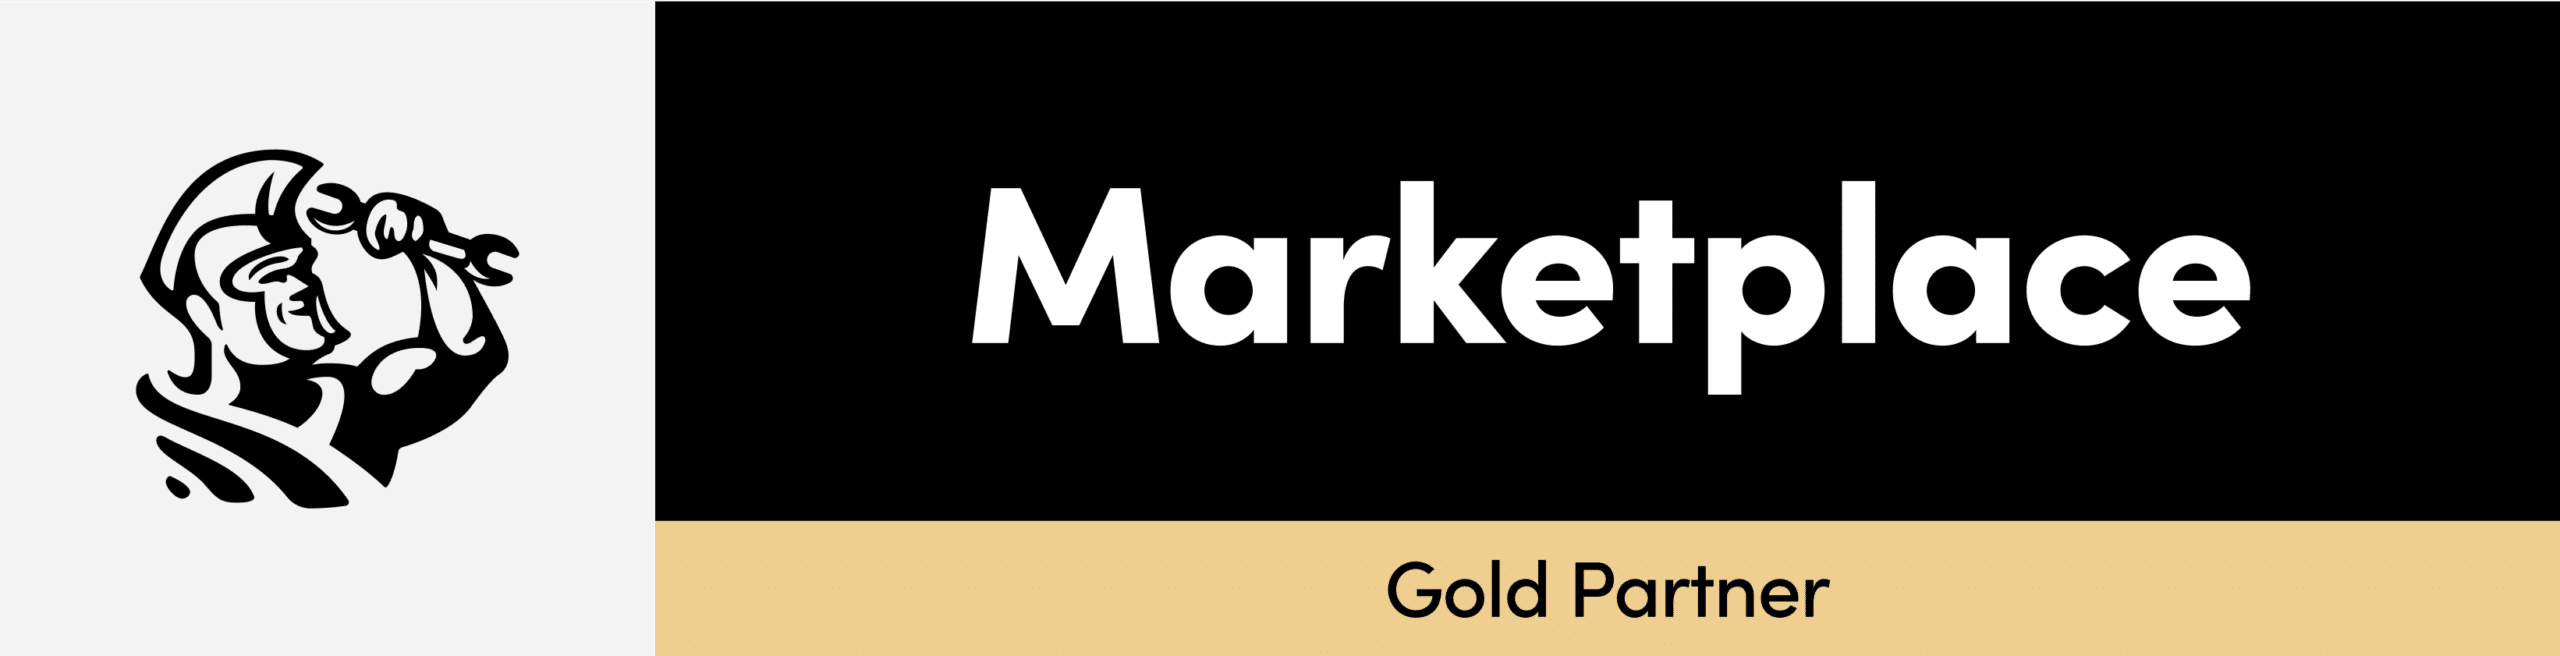 ServiceTitan Gold Partner logo